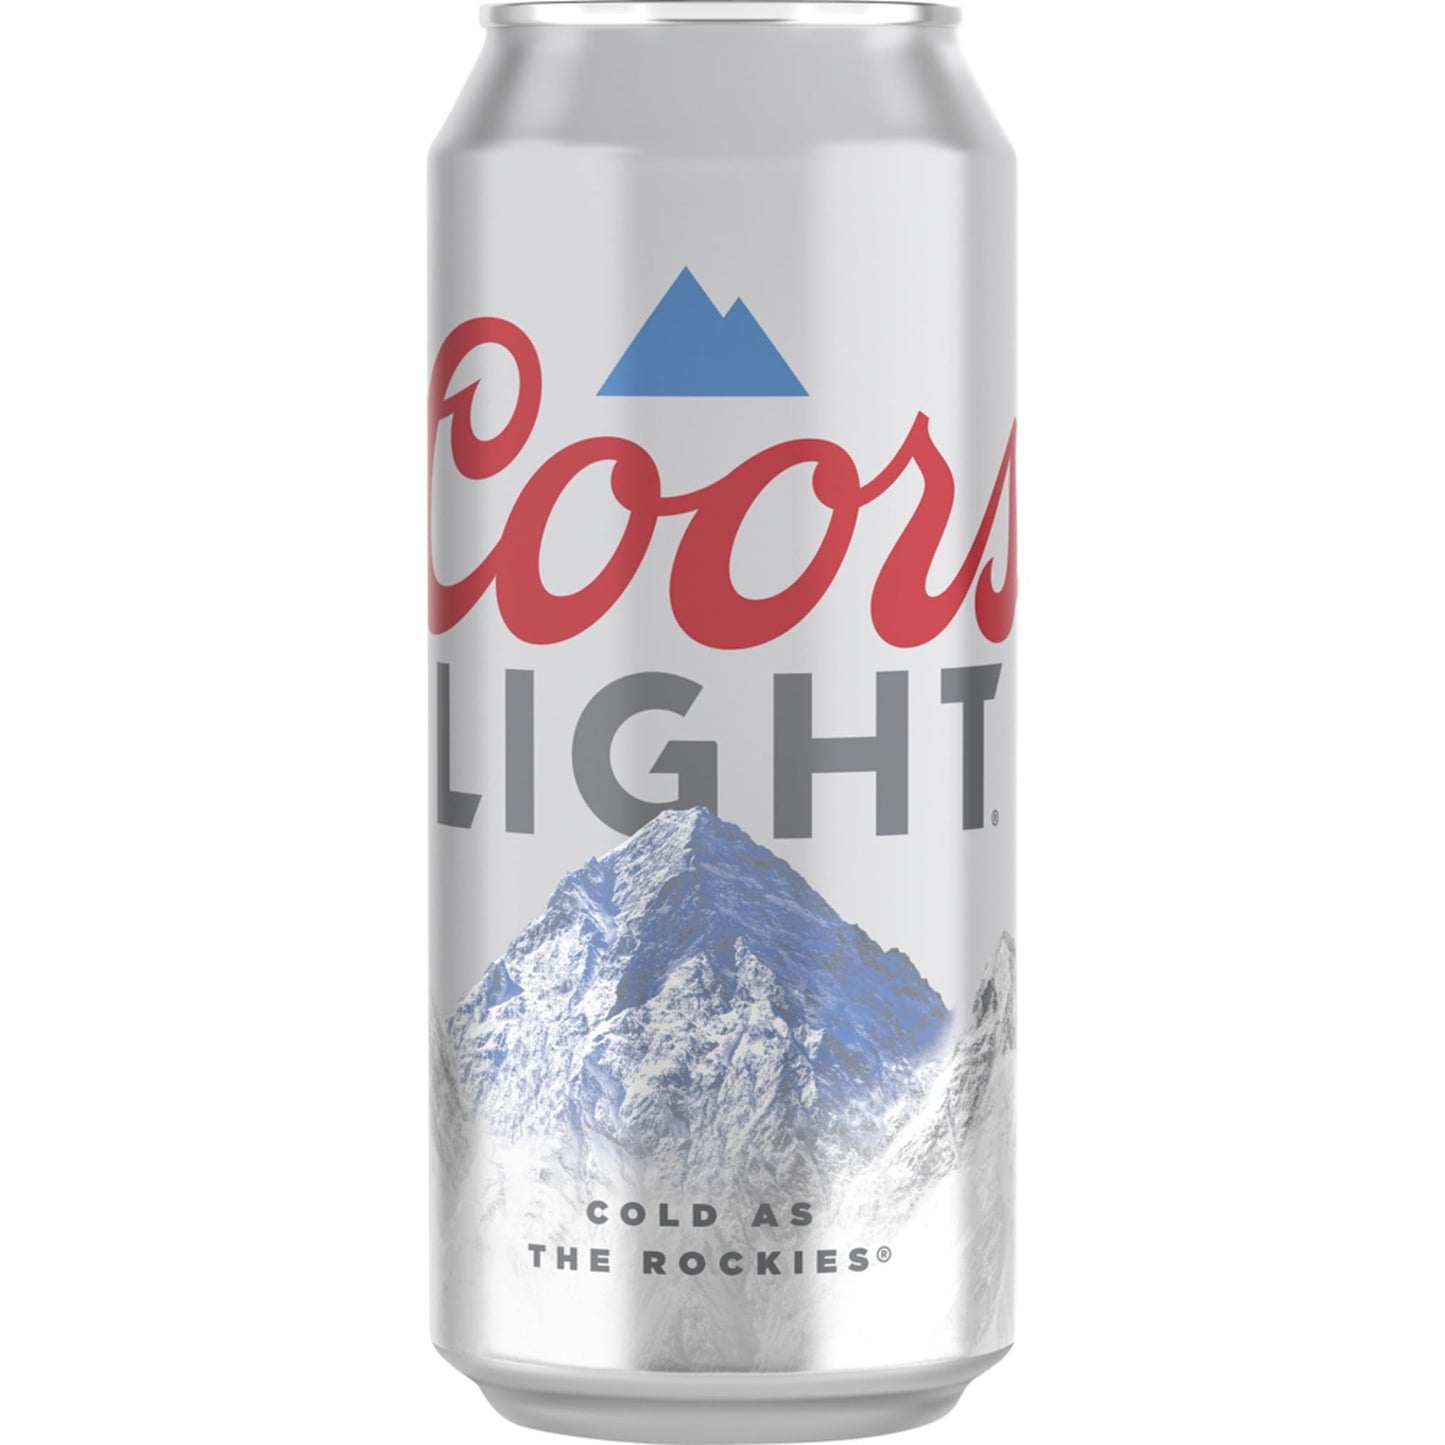 Coors Light Lager Beer, 6 Pack, 16 fl oz Cans, 4.2% ABV